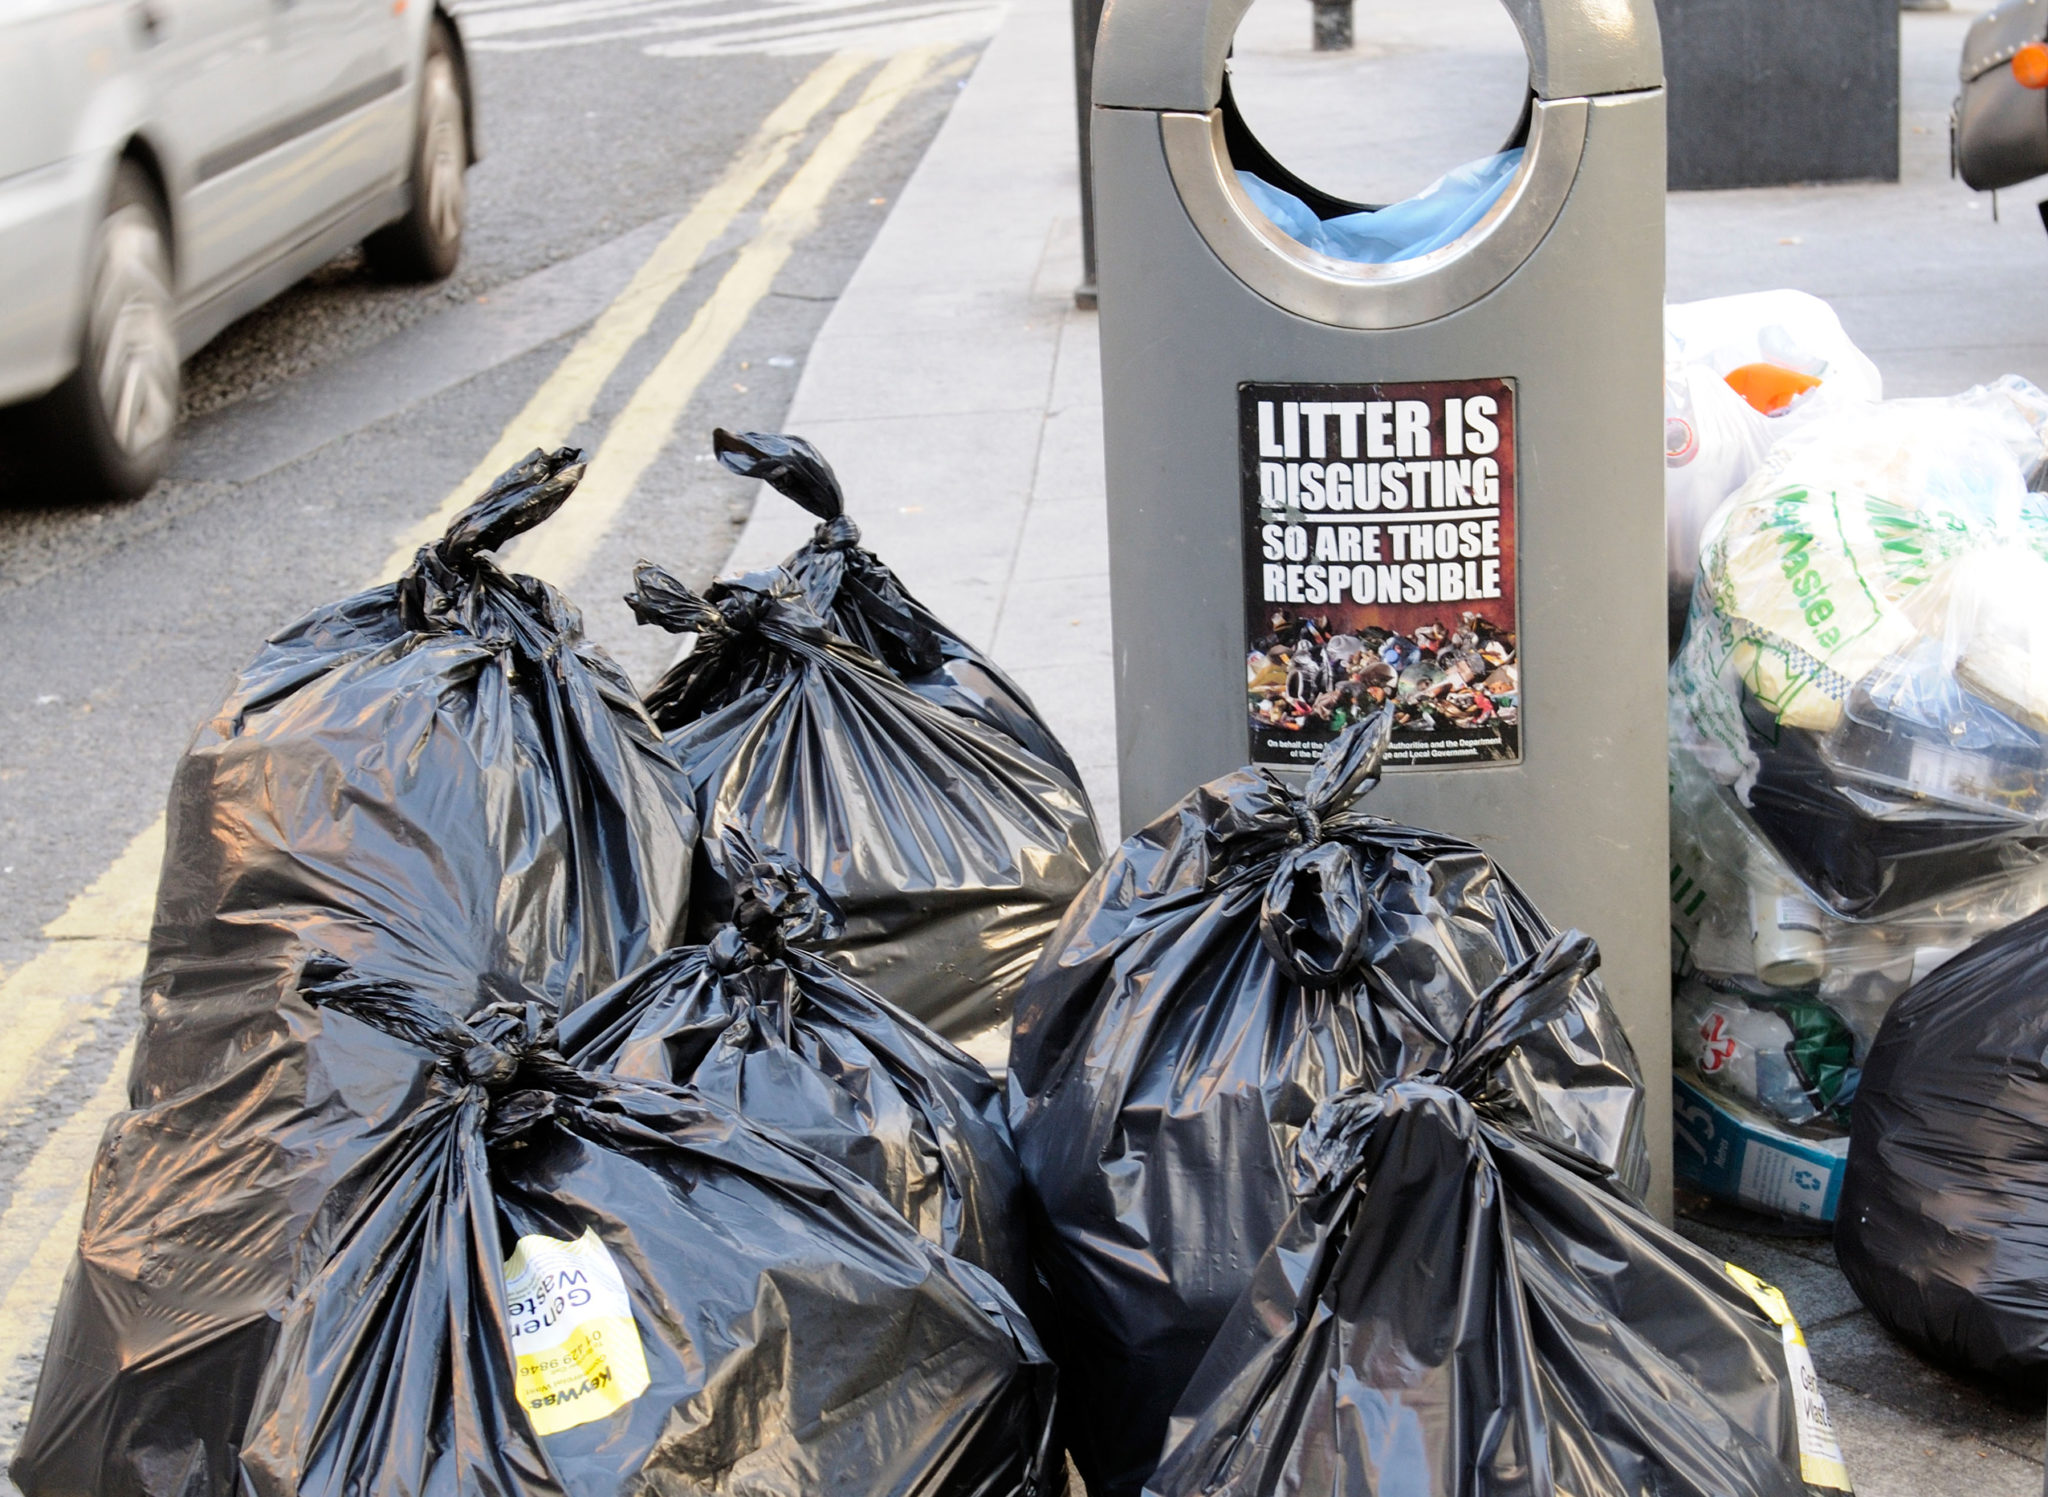 Bin bags await collection in Dublin. Image: Peter Titmuss / Alamy Stock Photo